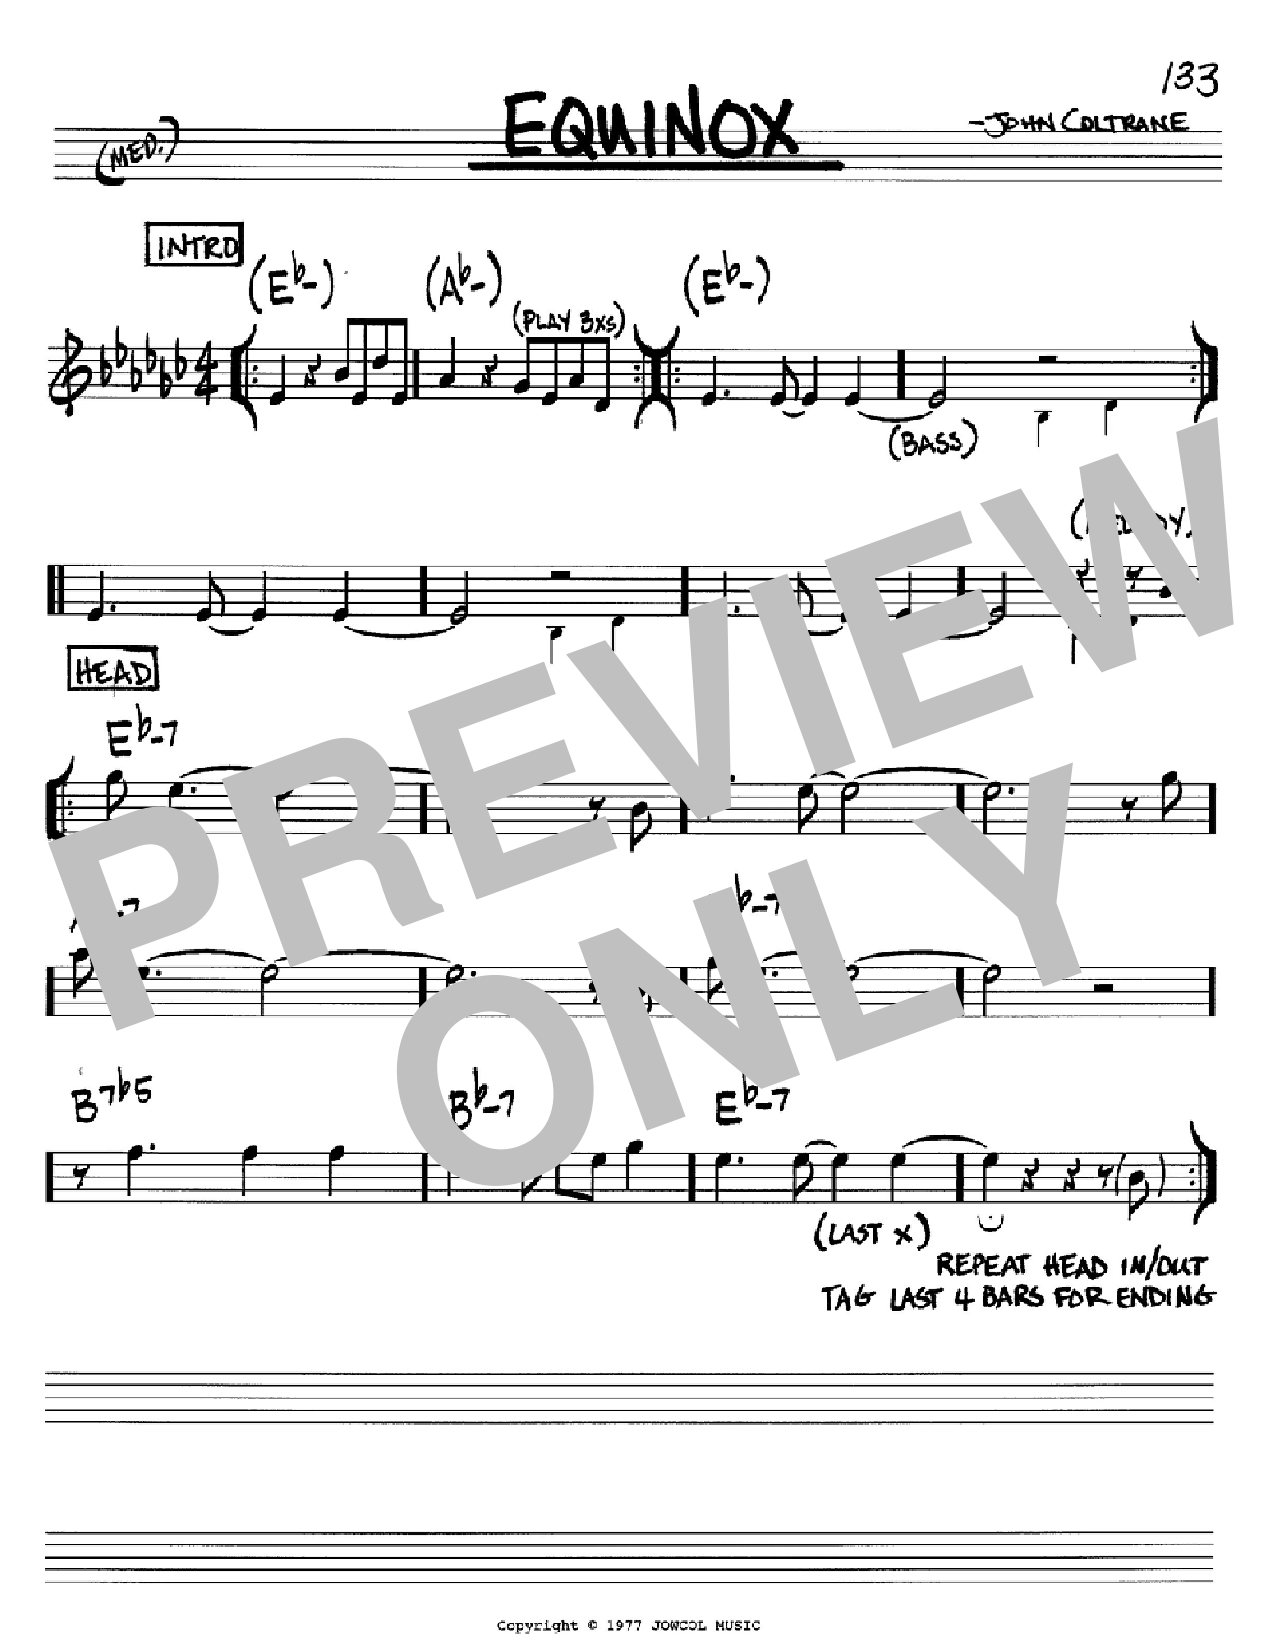 John Coltrane Equinox Sheet Music Notes & Chords for Real Book – Melody & Chords - Download or Print PDF